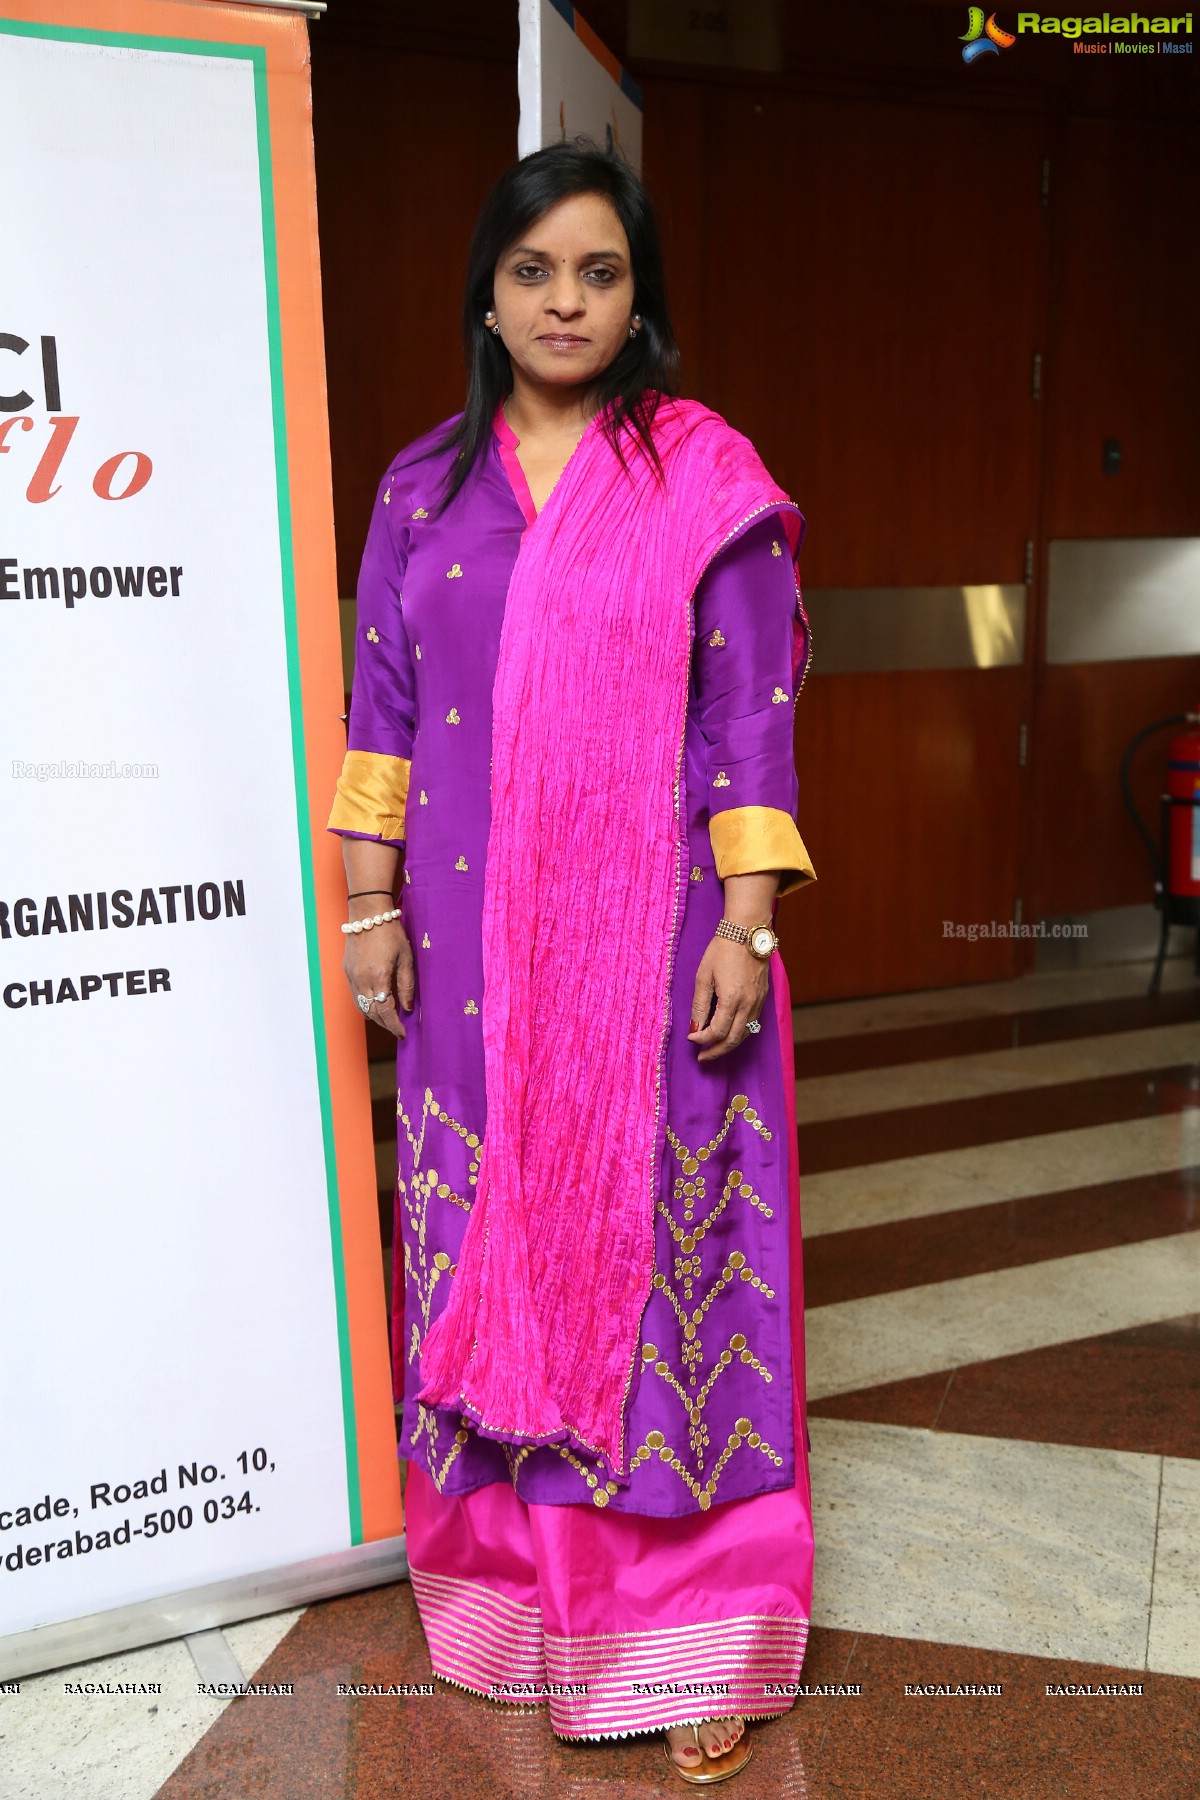 FICCI Interactive Session with Manisha Koirala at HICC, Hyderabad